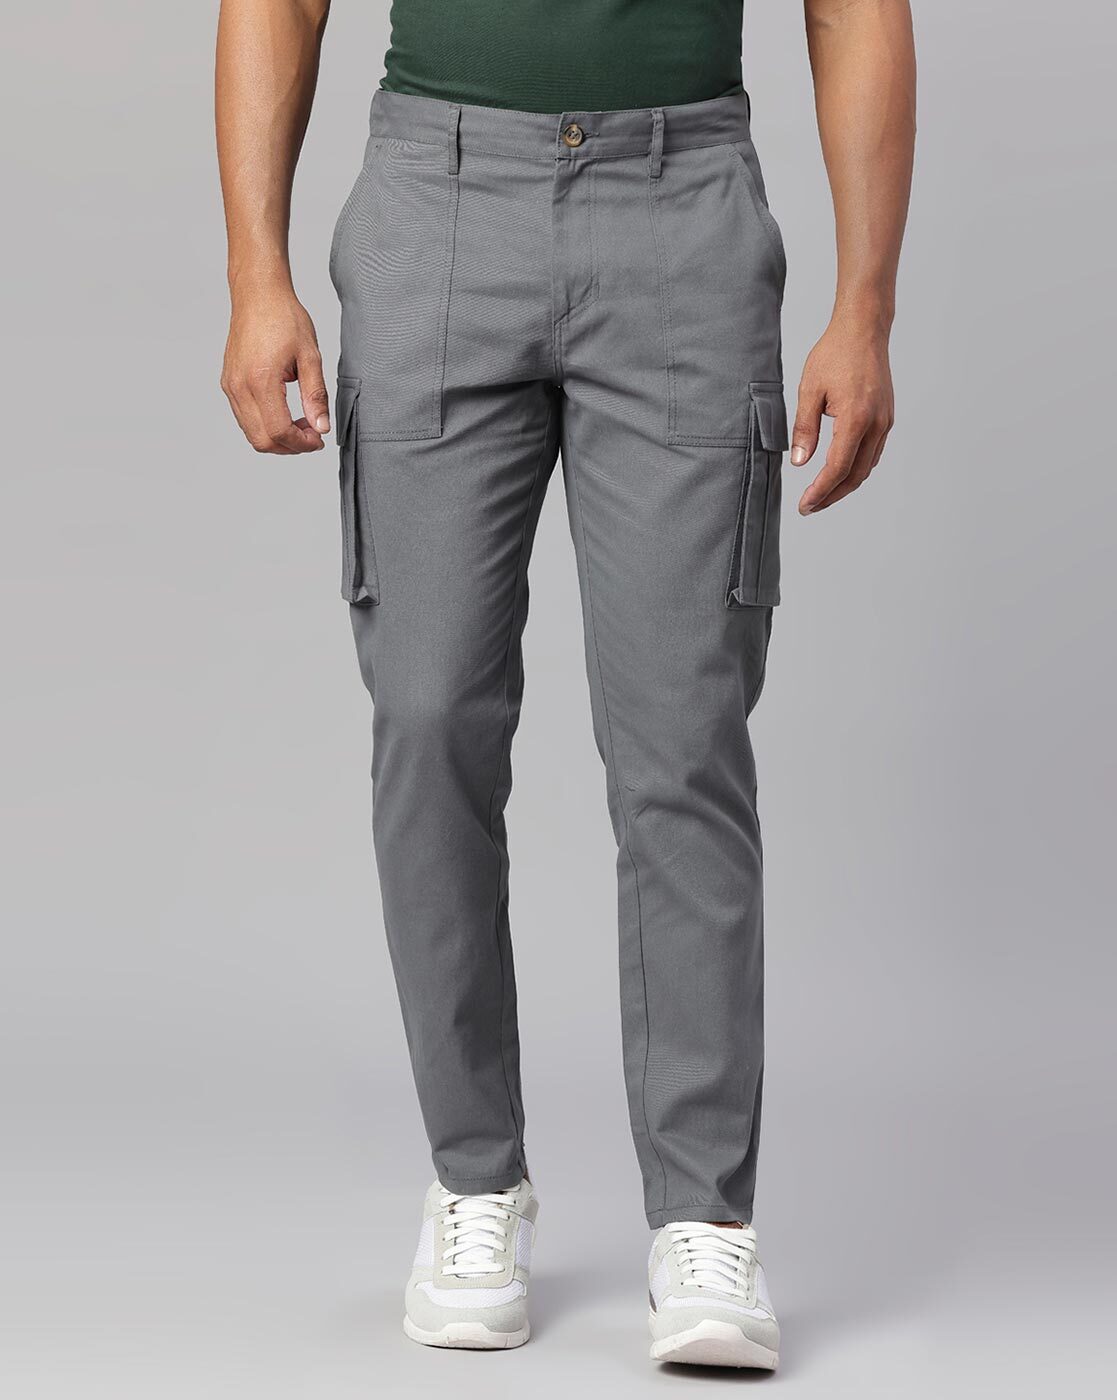 Buy Men's Green Slim Fit Cargo Trousers Online at Bewakoof